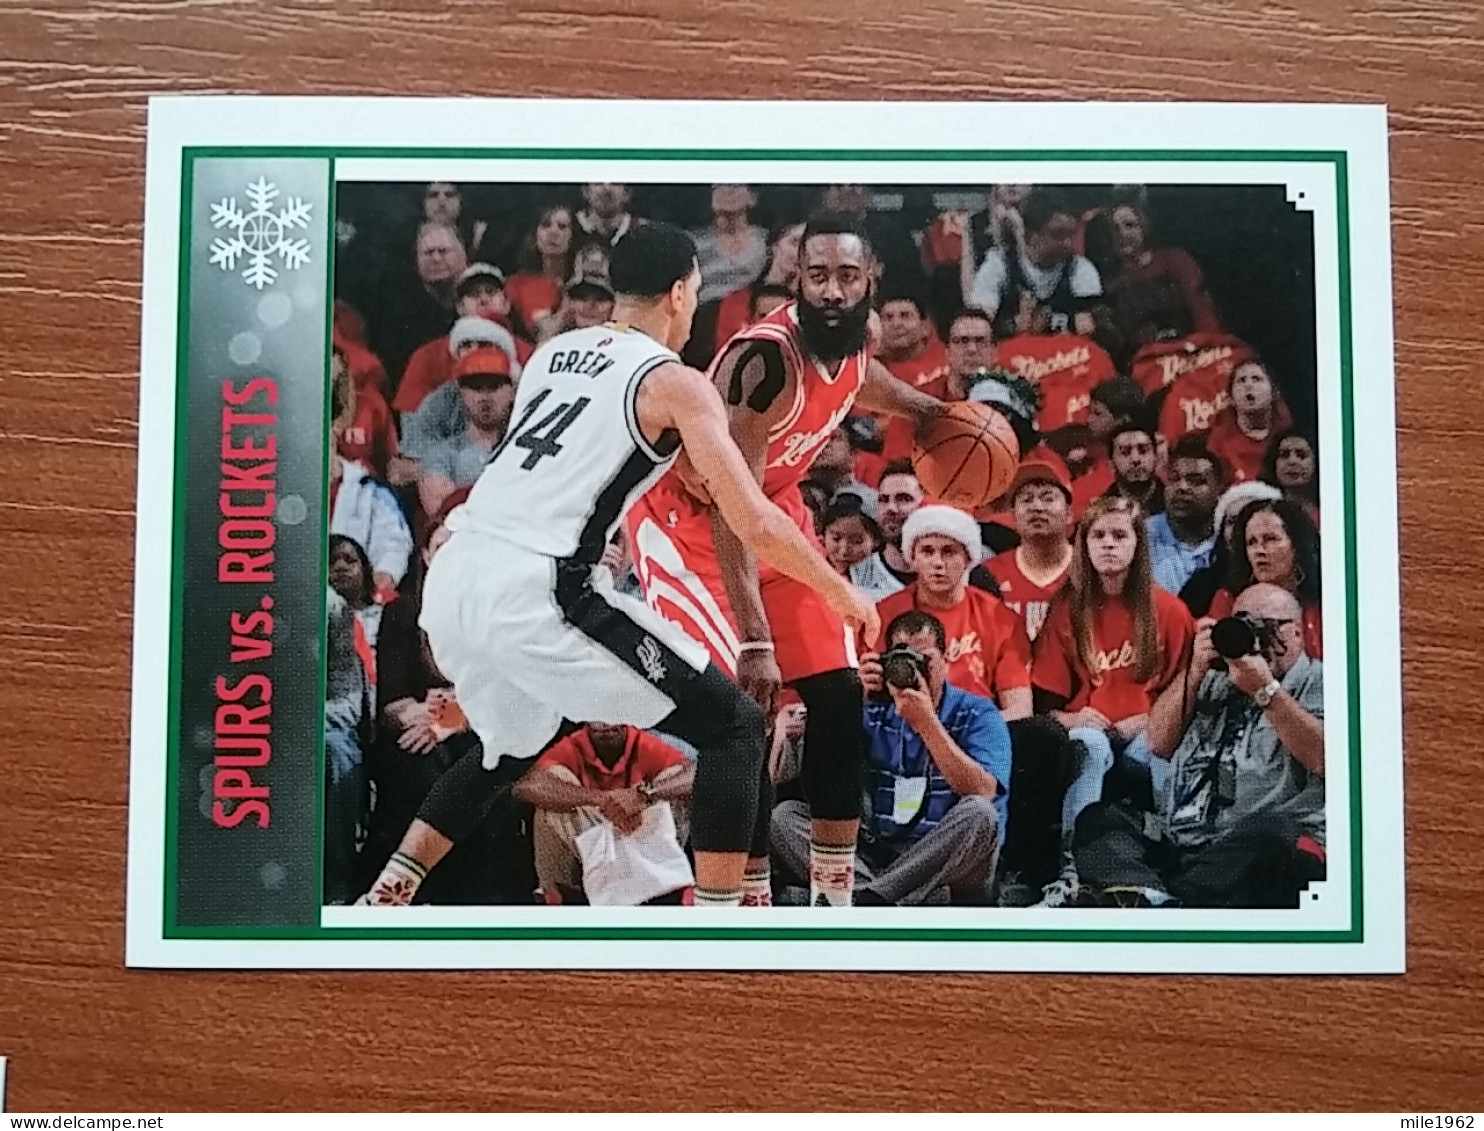 ST 44 - NBA Basketball 2016-2017, Sticker, Autocollant, PANINI, No 372 Spurs Vs. Rockets - Libros